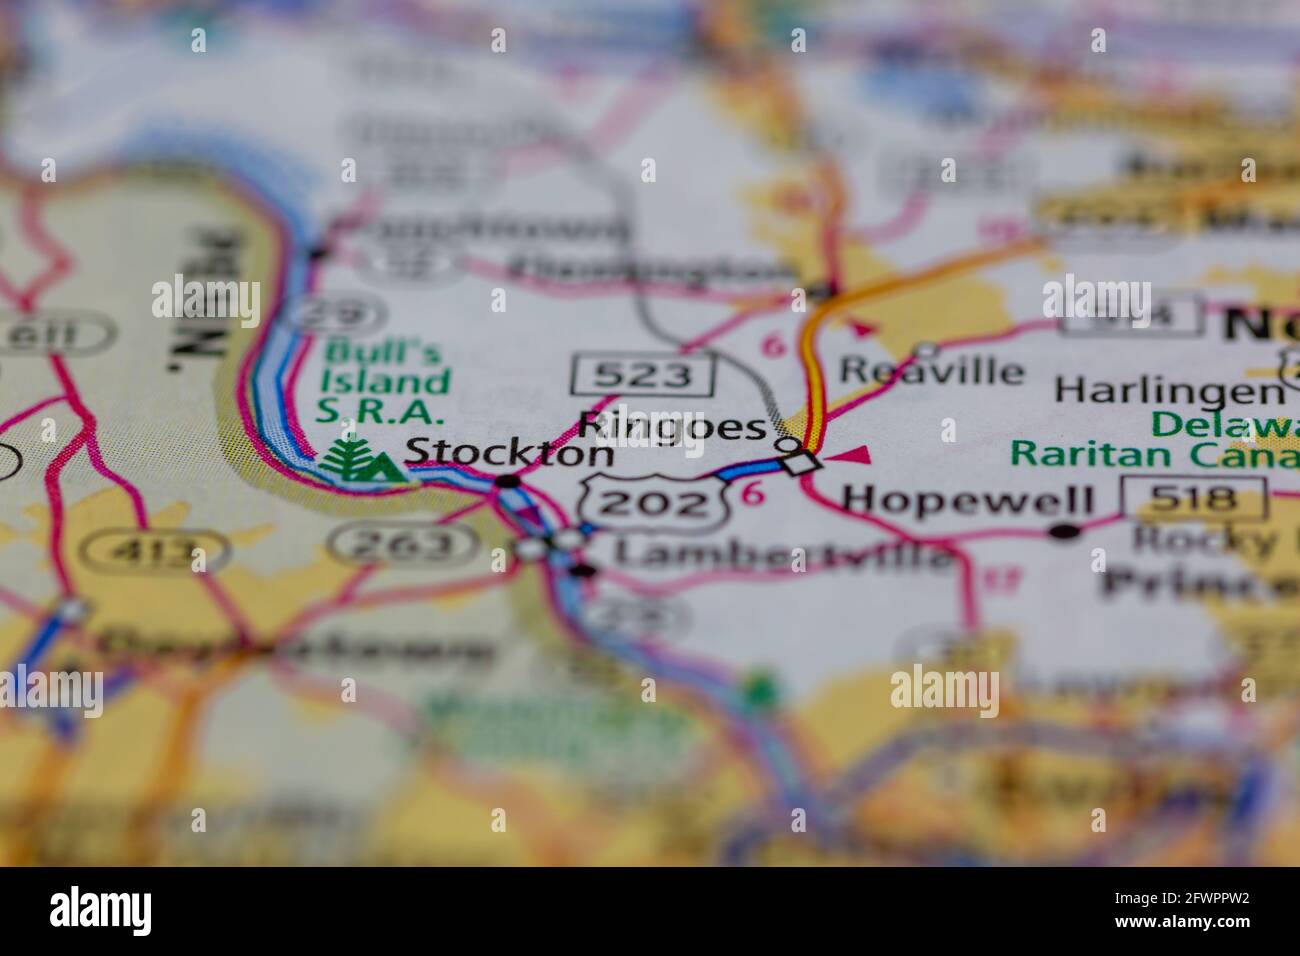 Rinoes New Jersey USA mostrado en un mapa de geografía o. hoja de ruta Foto de stock